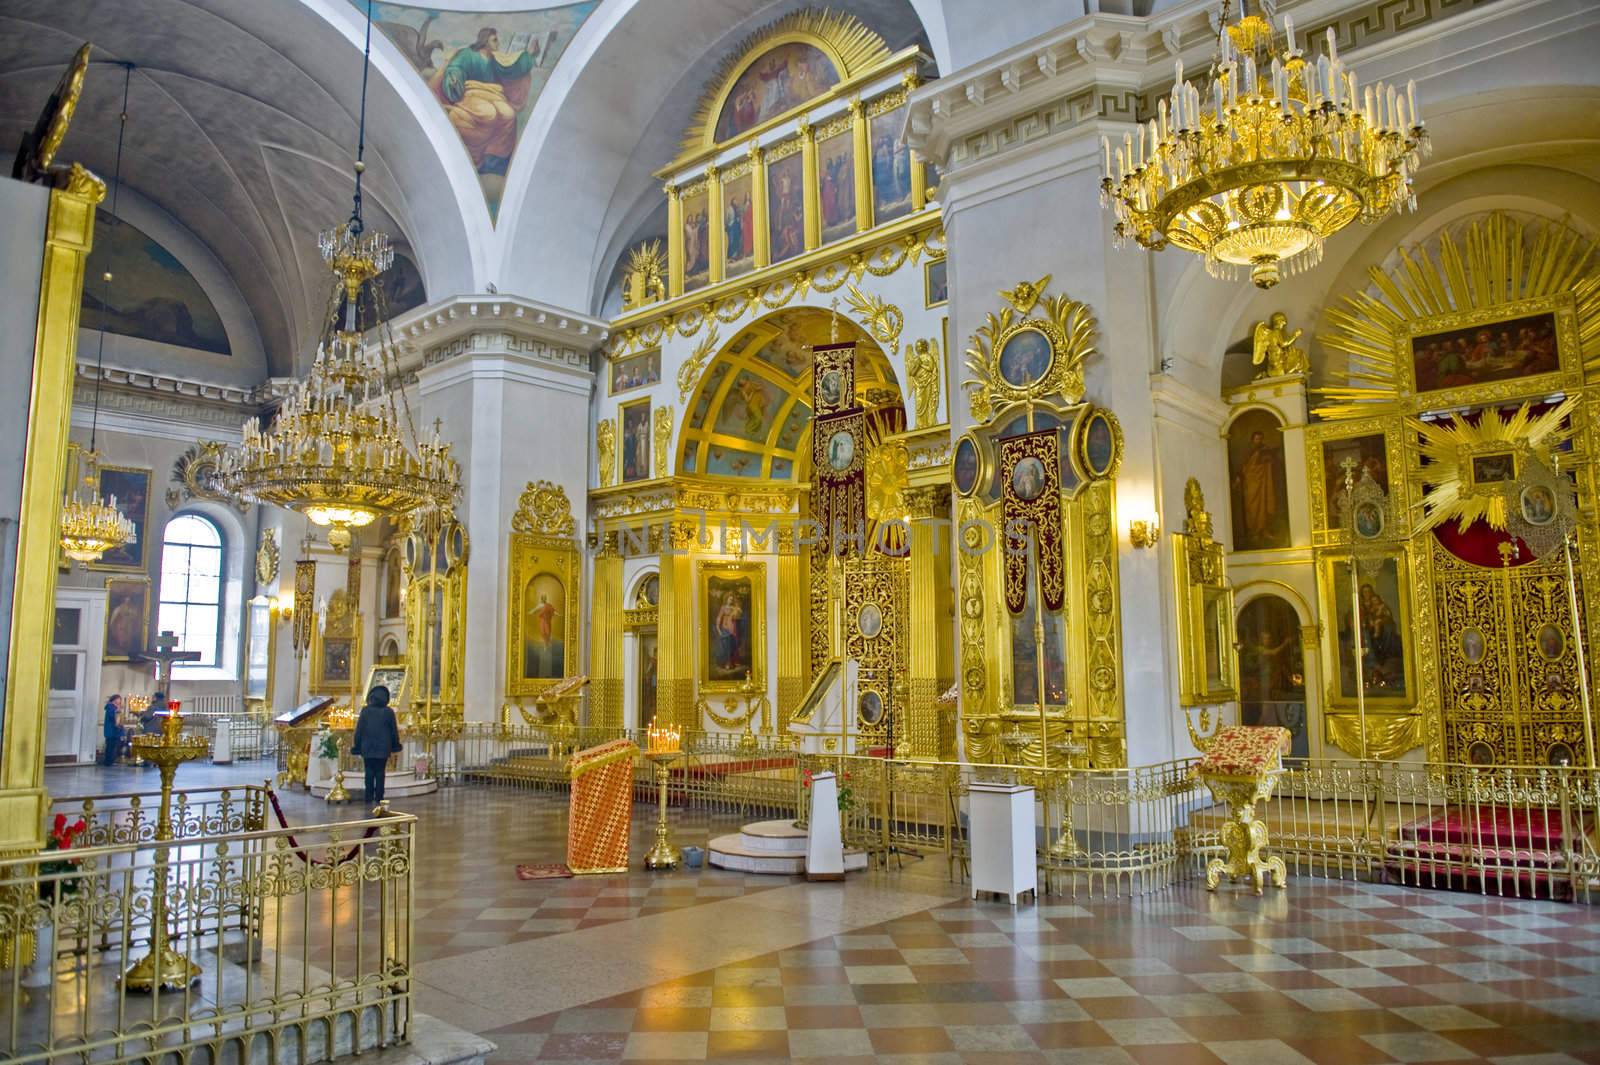 Russian ortodox church, taken in Russia, St.Petersburg.